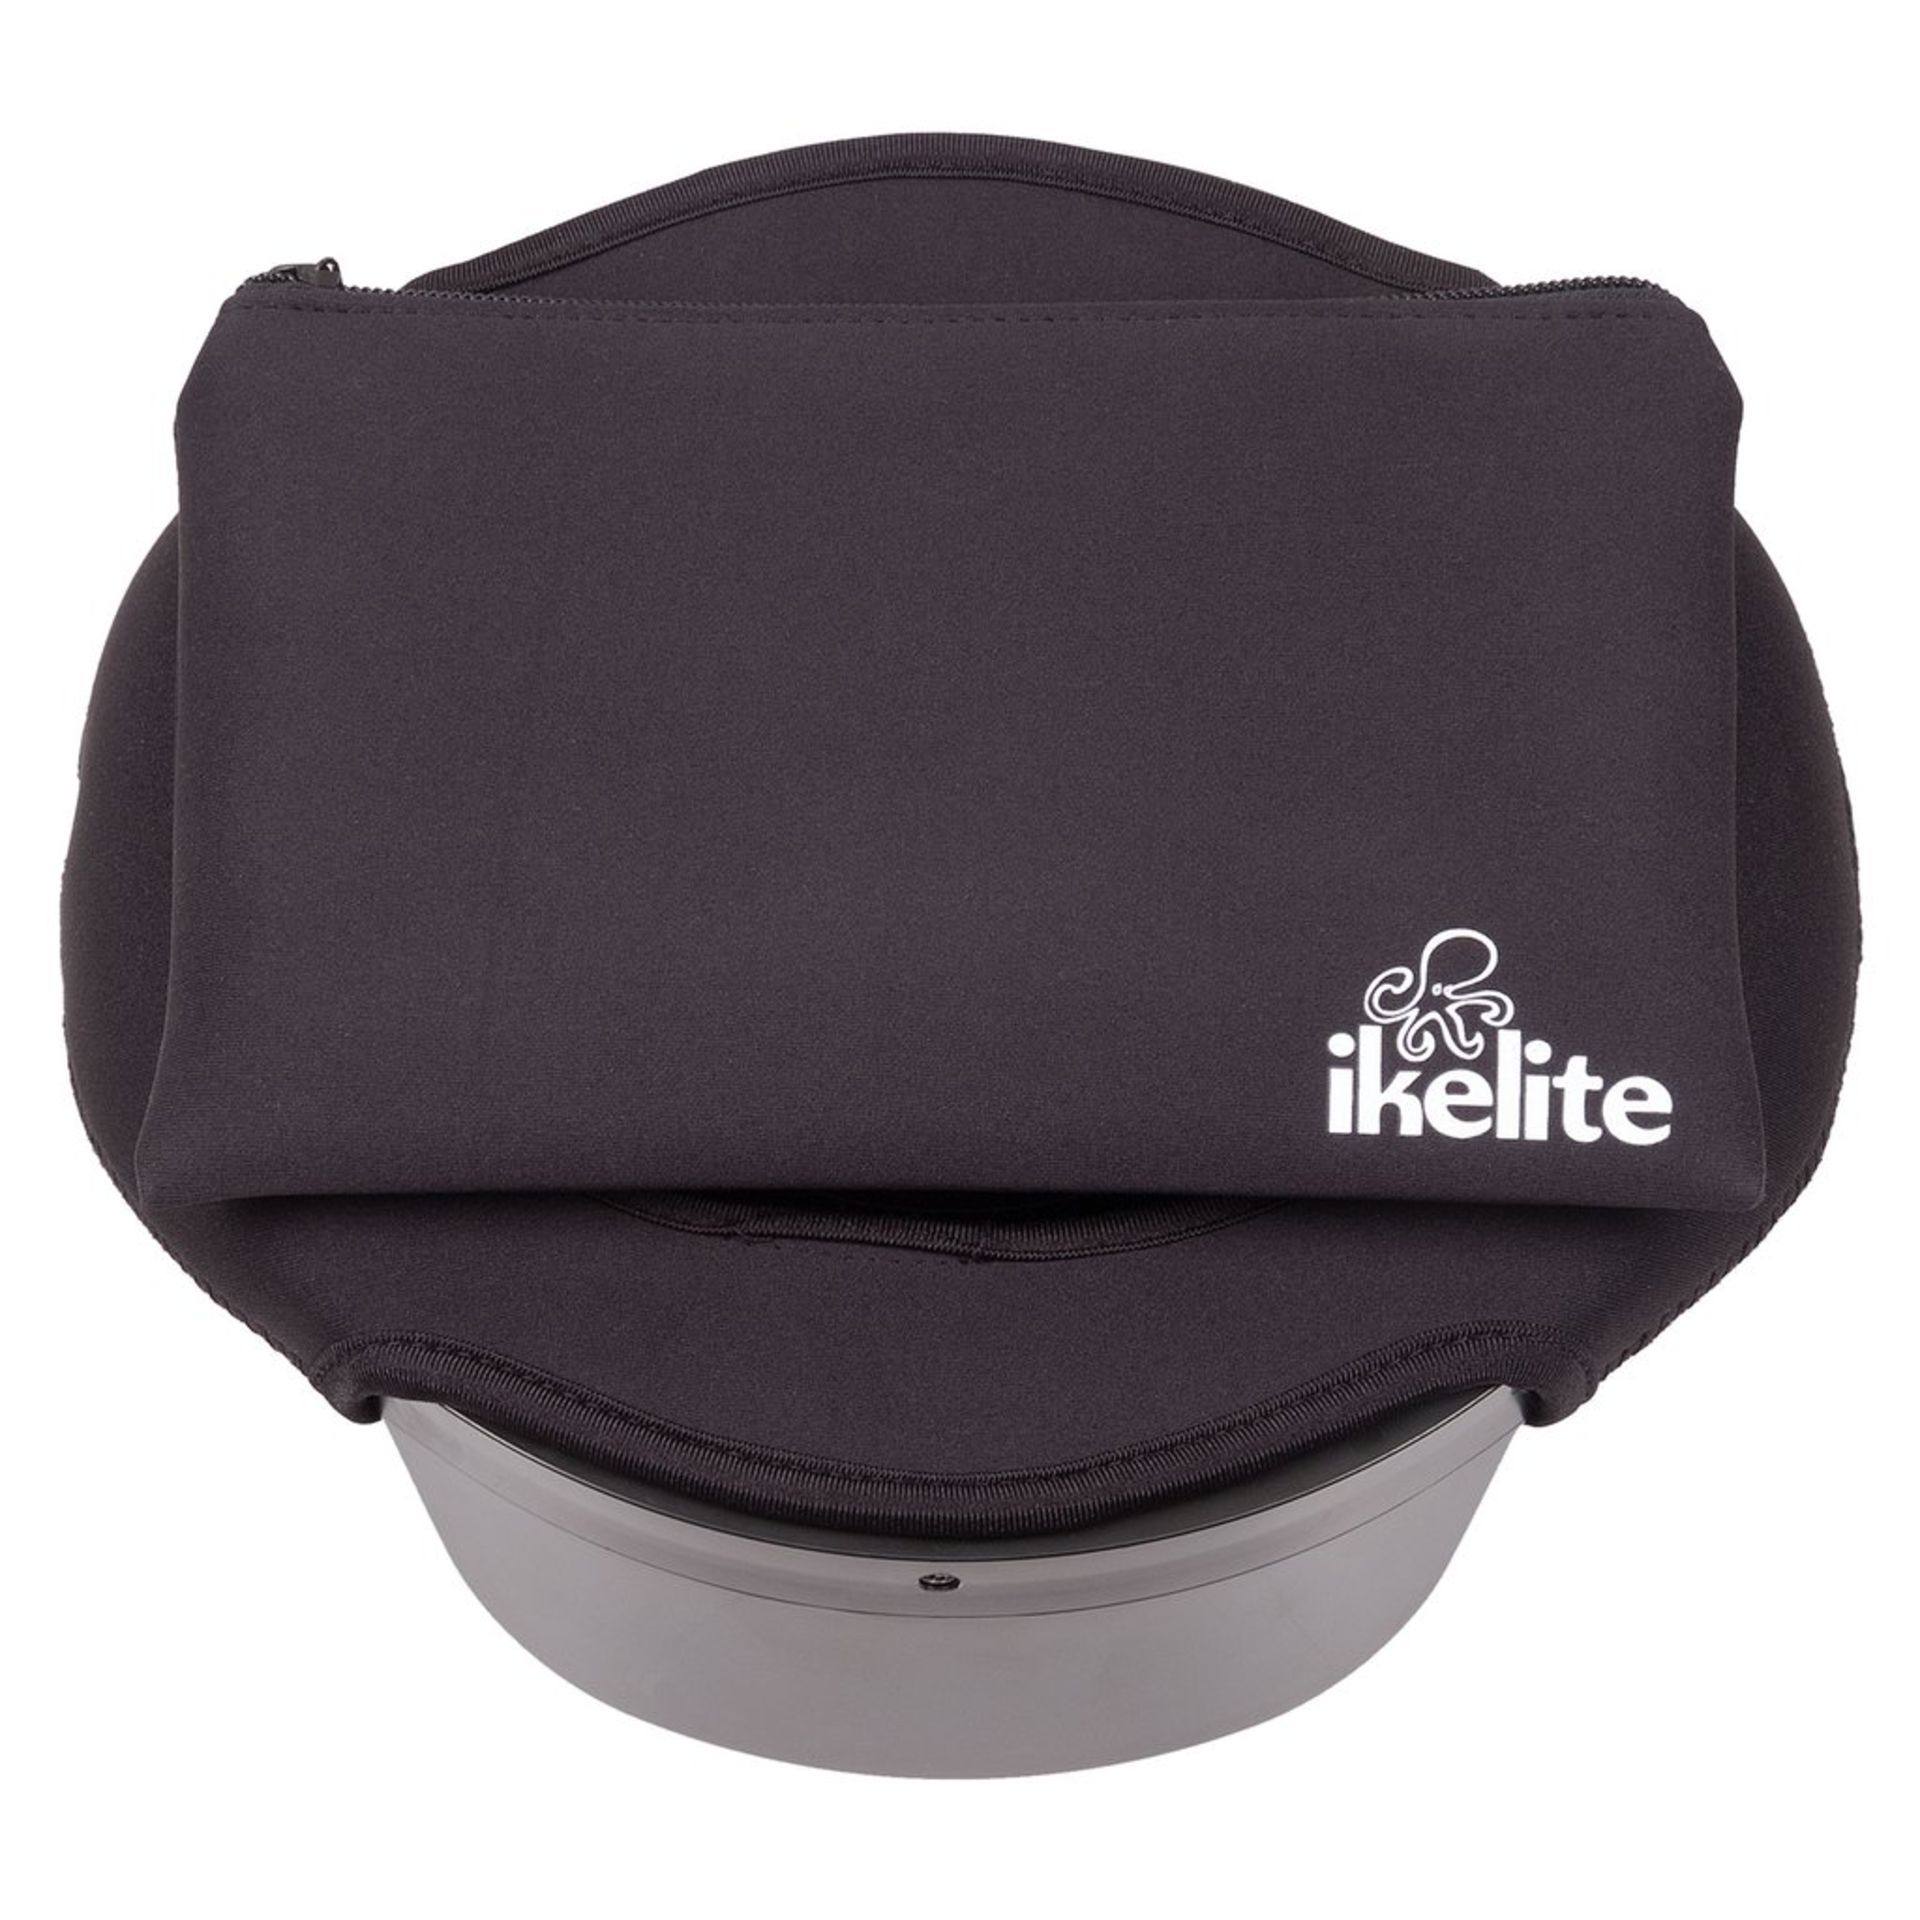 IKELITE 0200.83 Neoprene Rear Cover for 8" Dome Ports